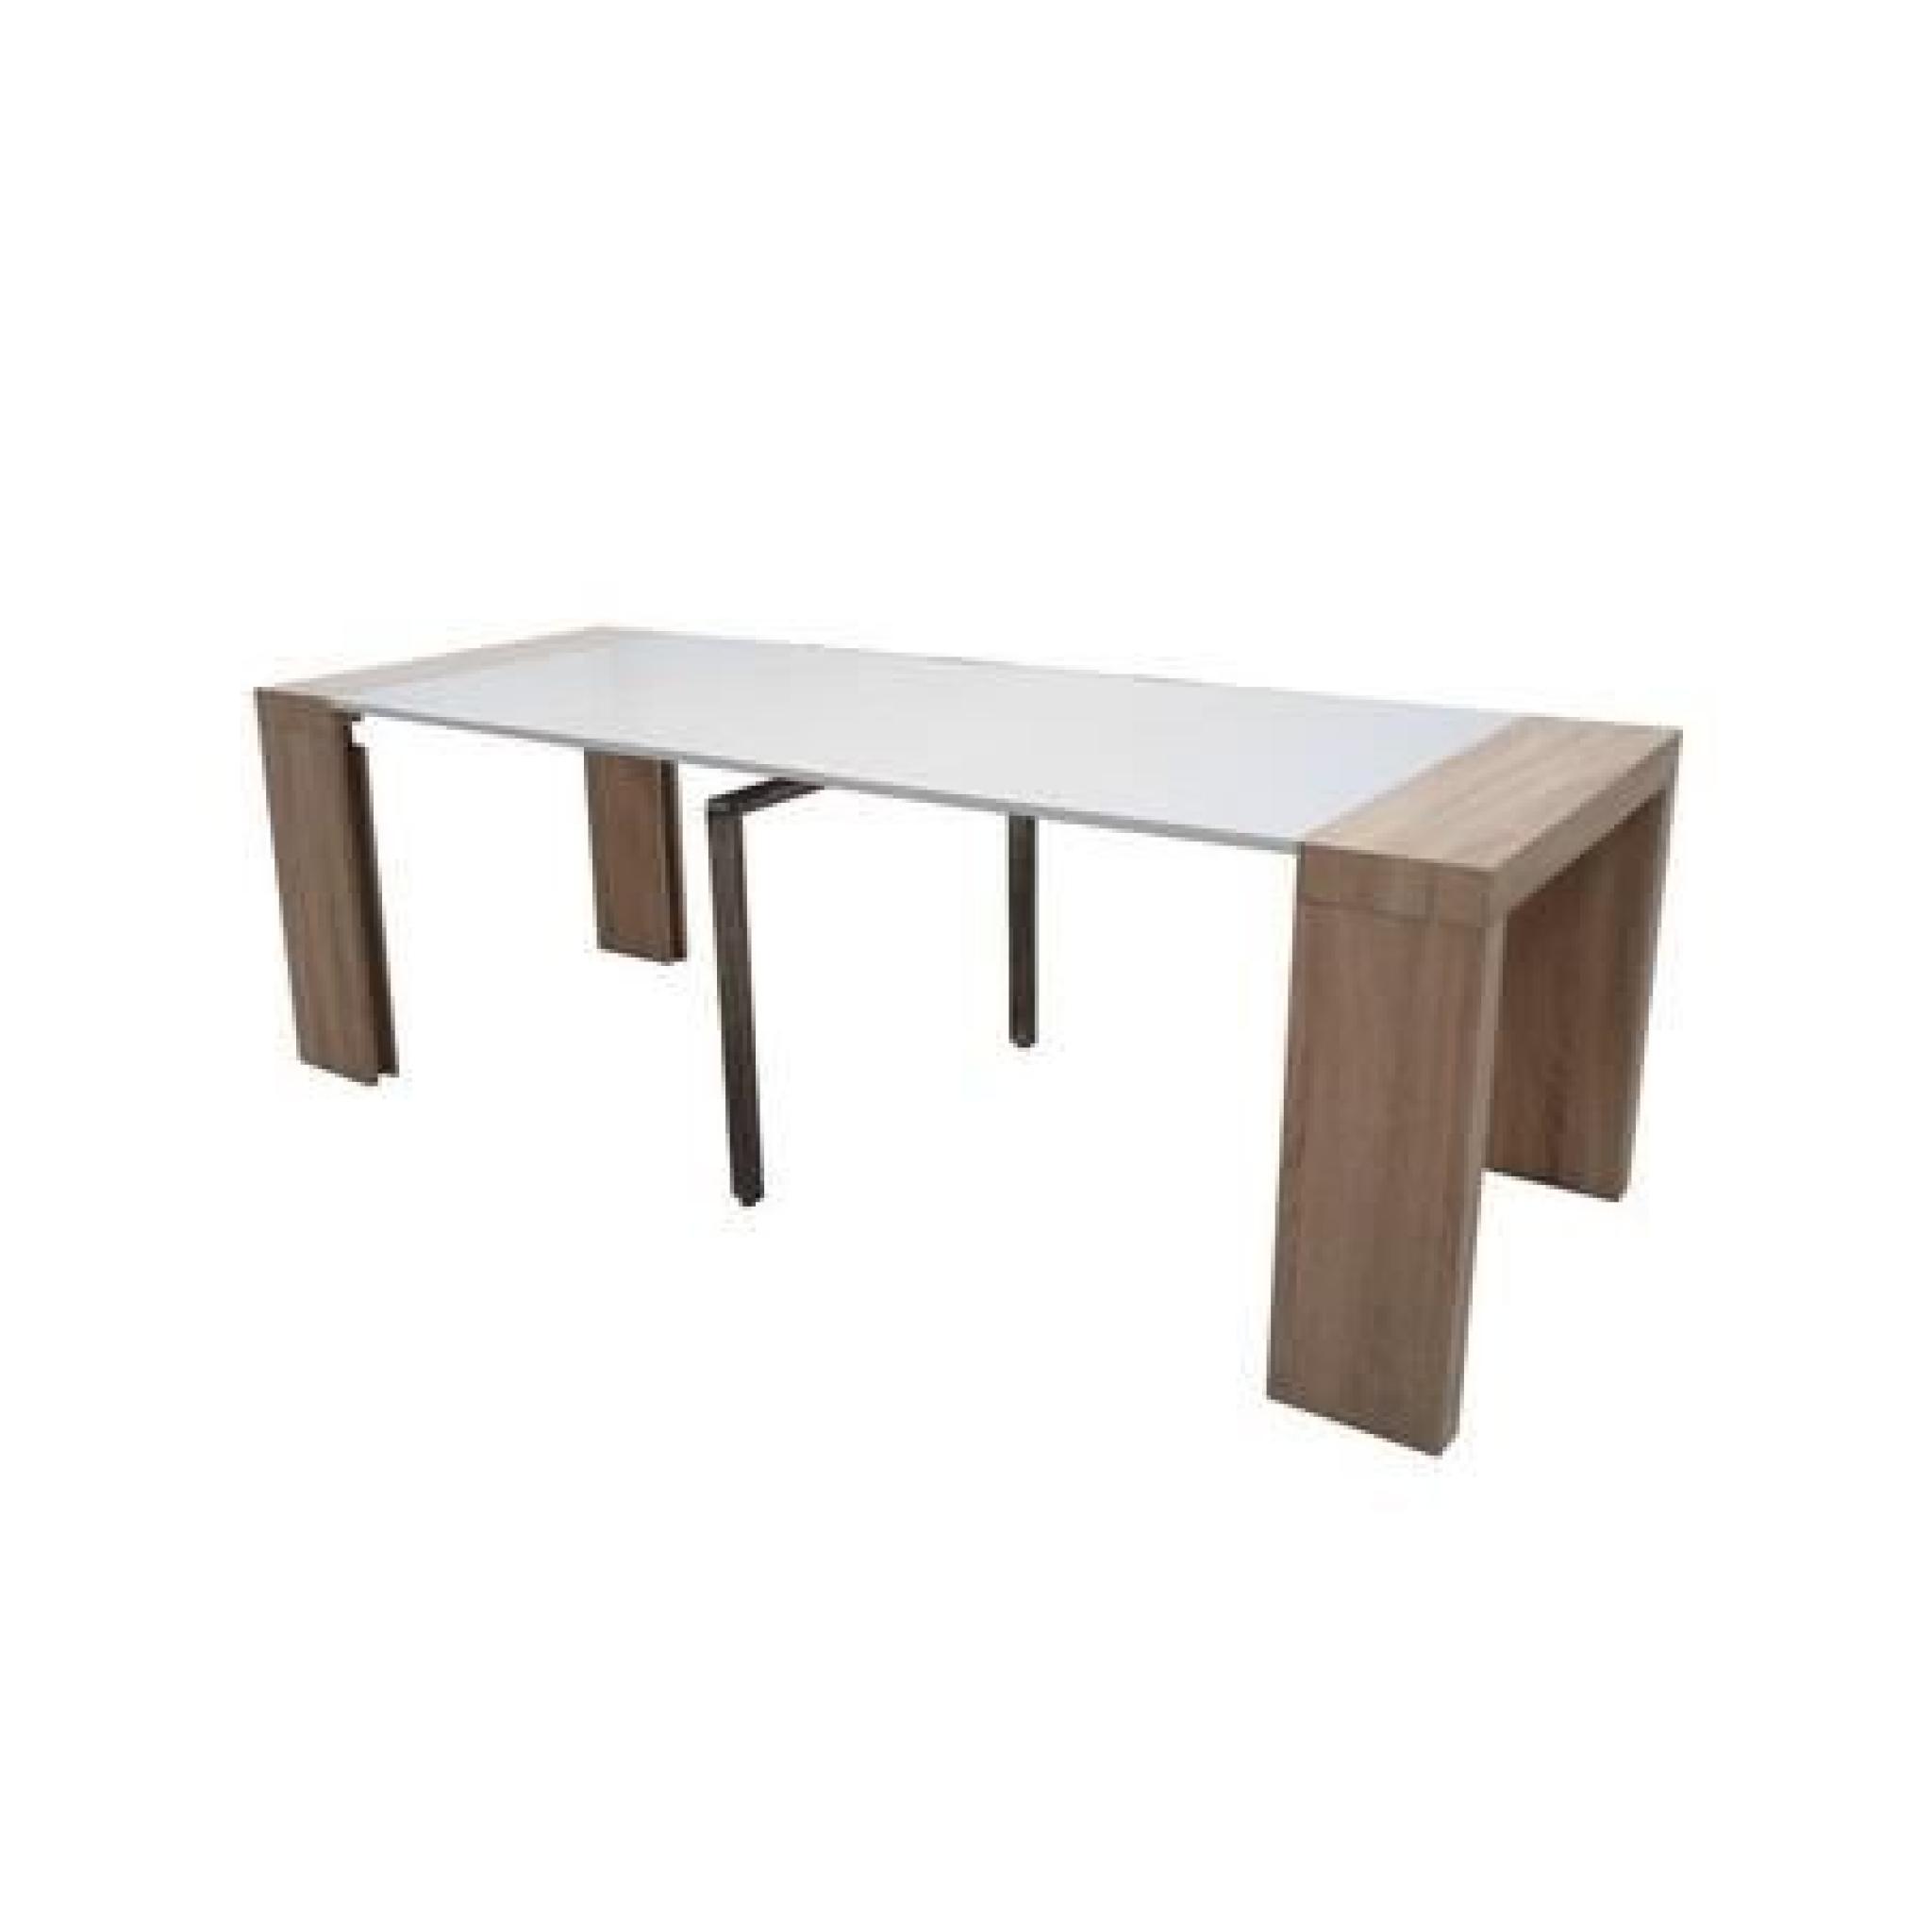 Table Console Extensible Othello 4 allonges Chêne clair -2m25-